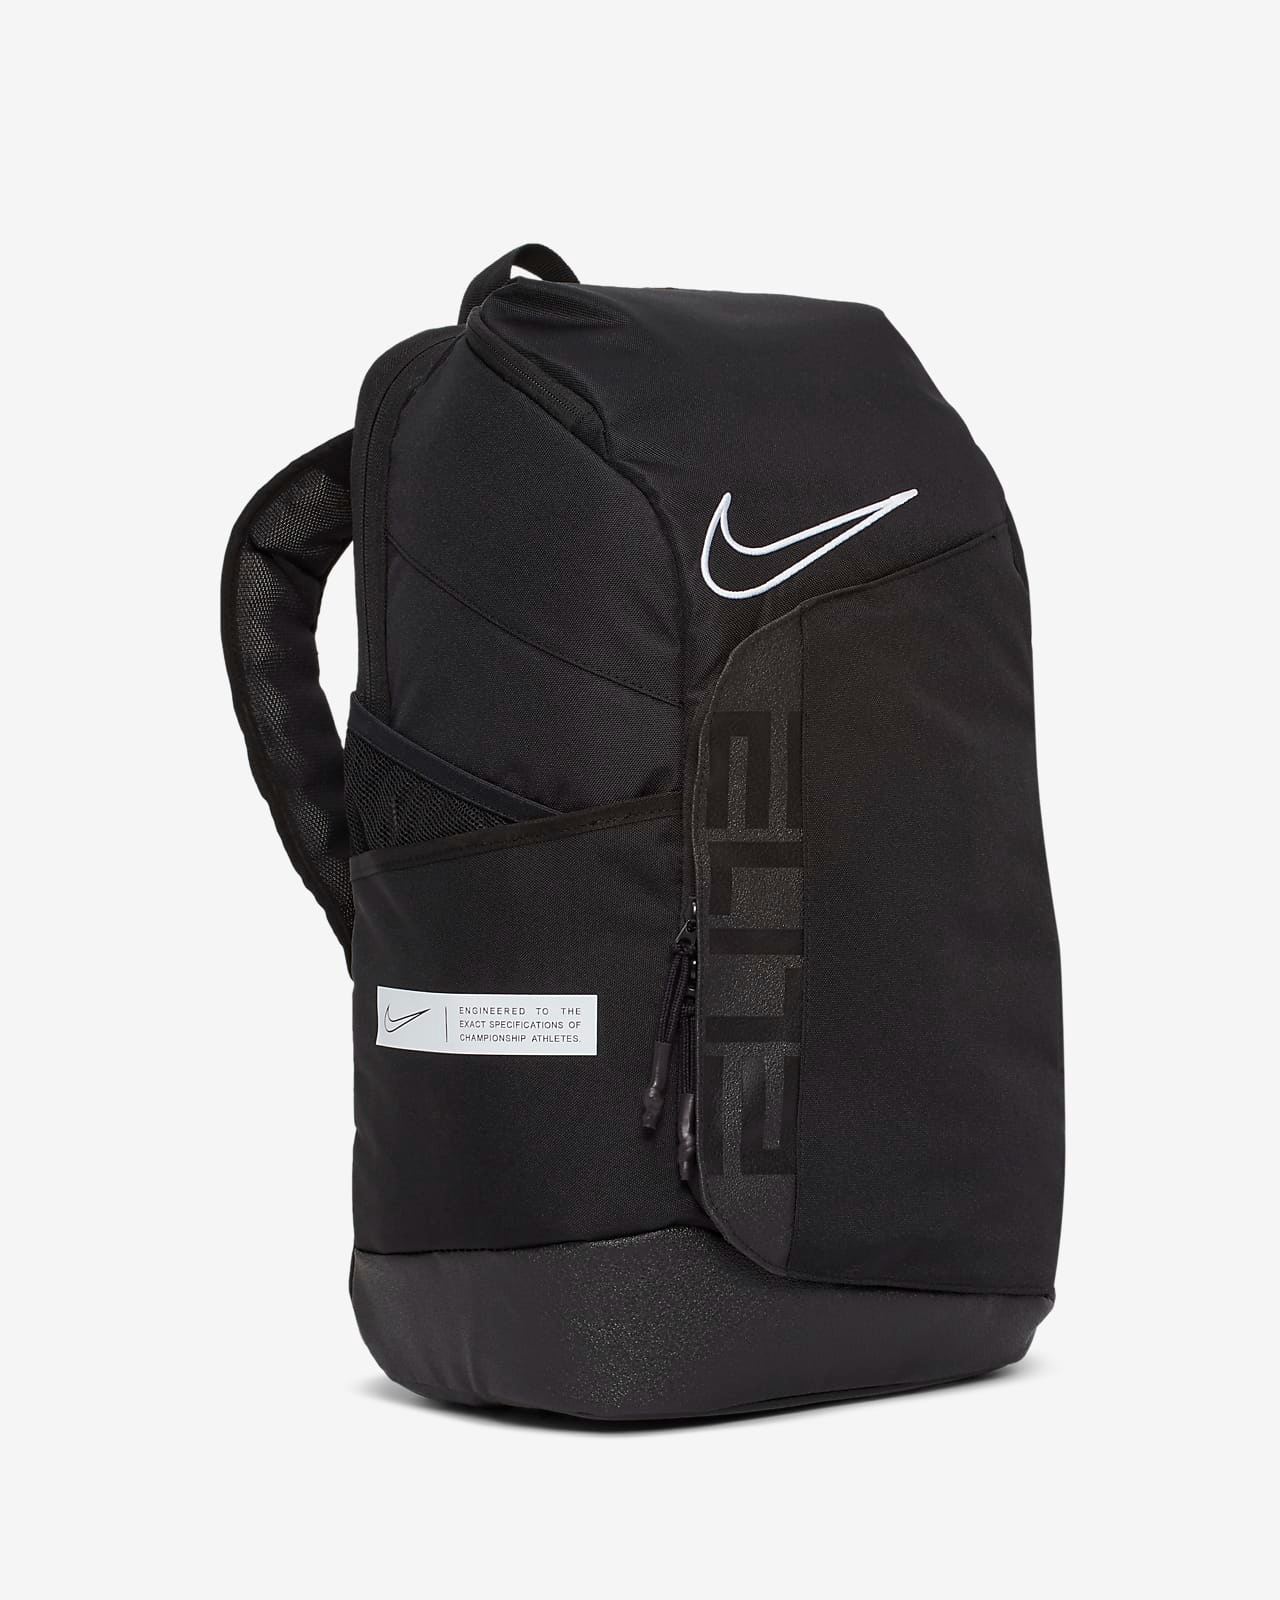 50% OFF the Nike Hoops Elite Pro Backpack 